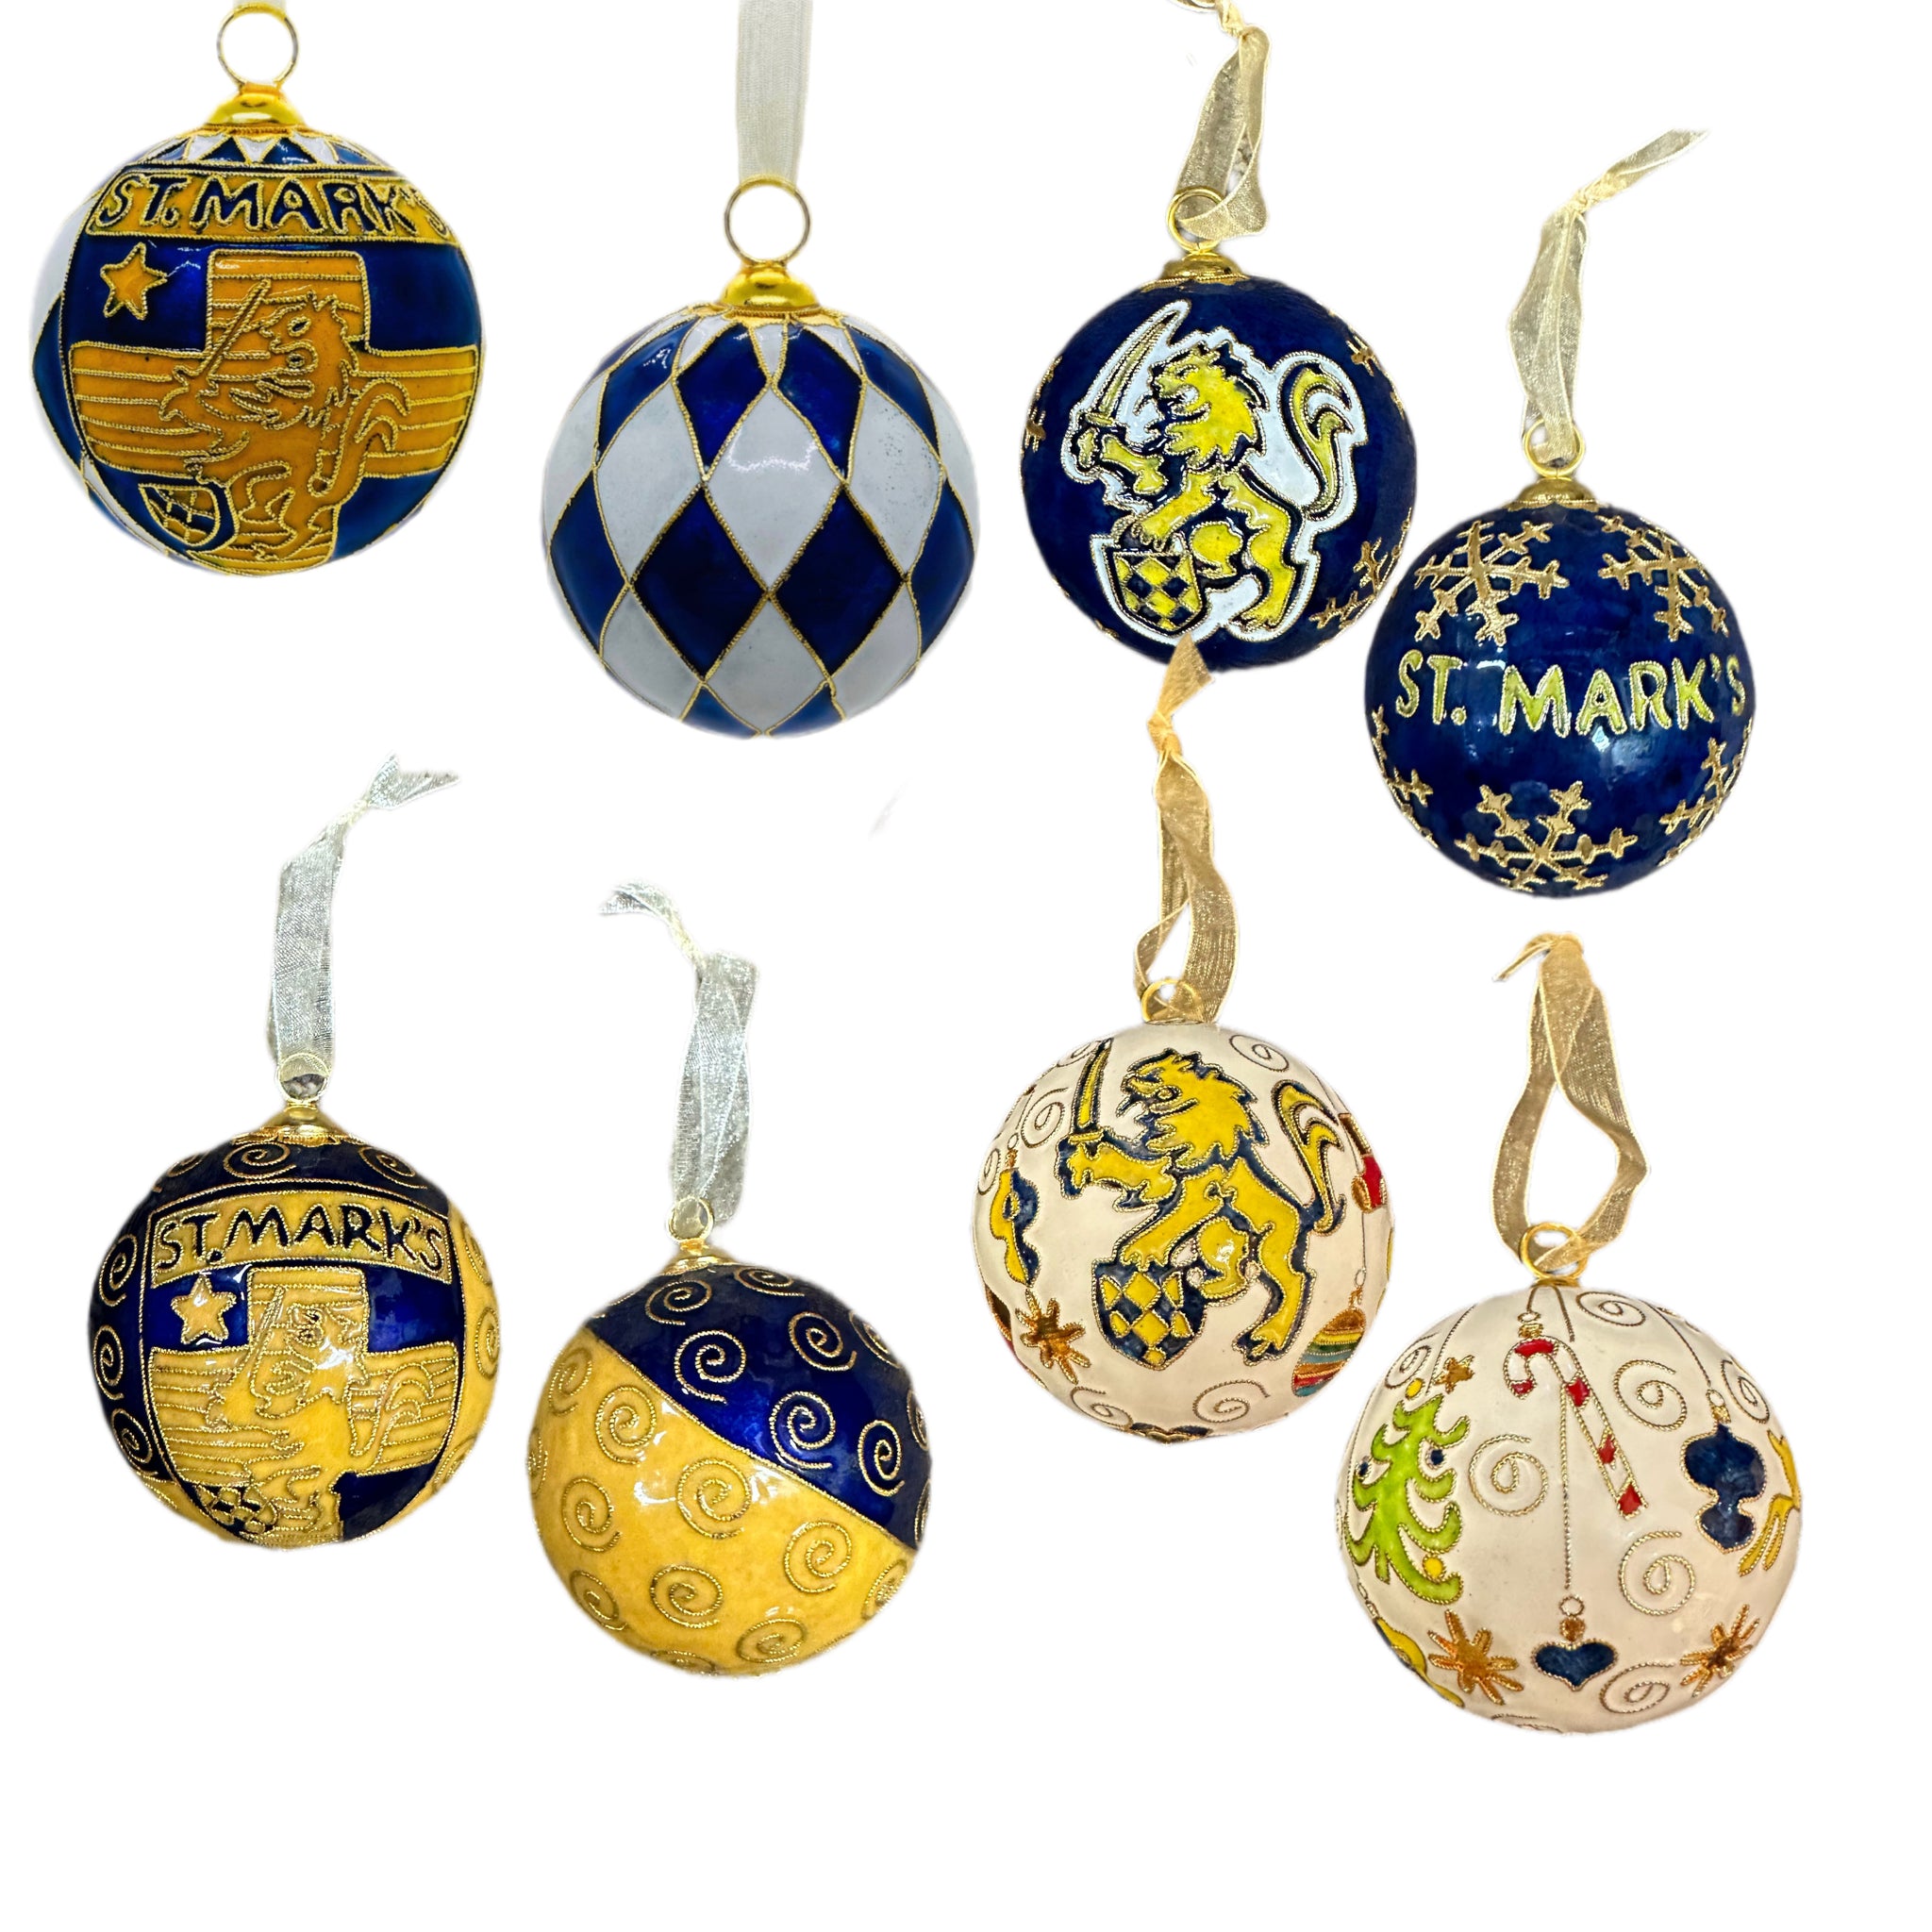 Cloissone Ball Ornaments